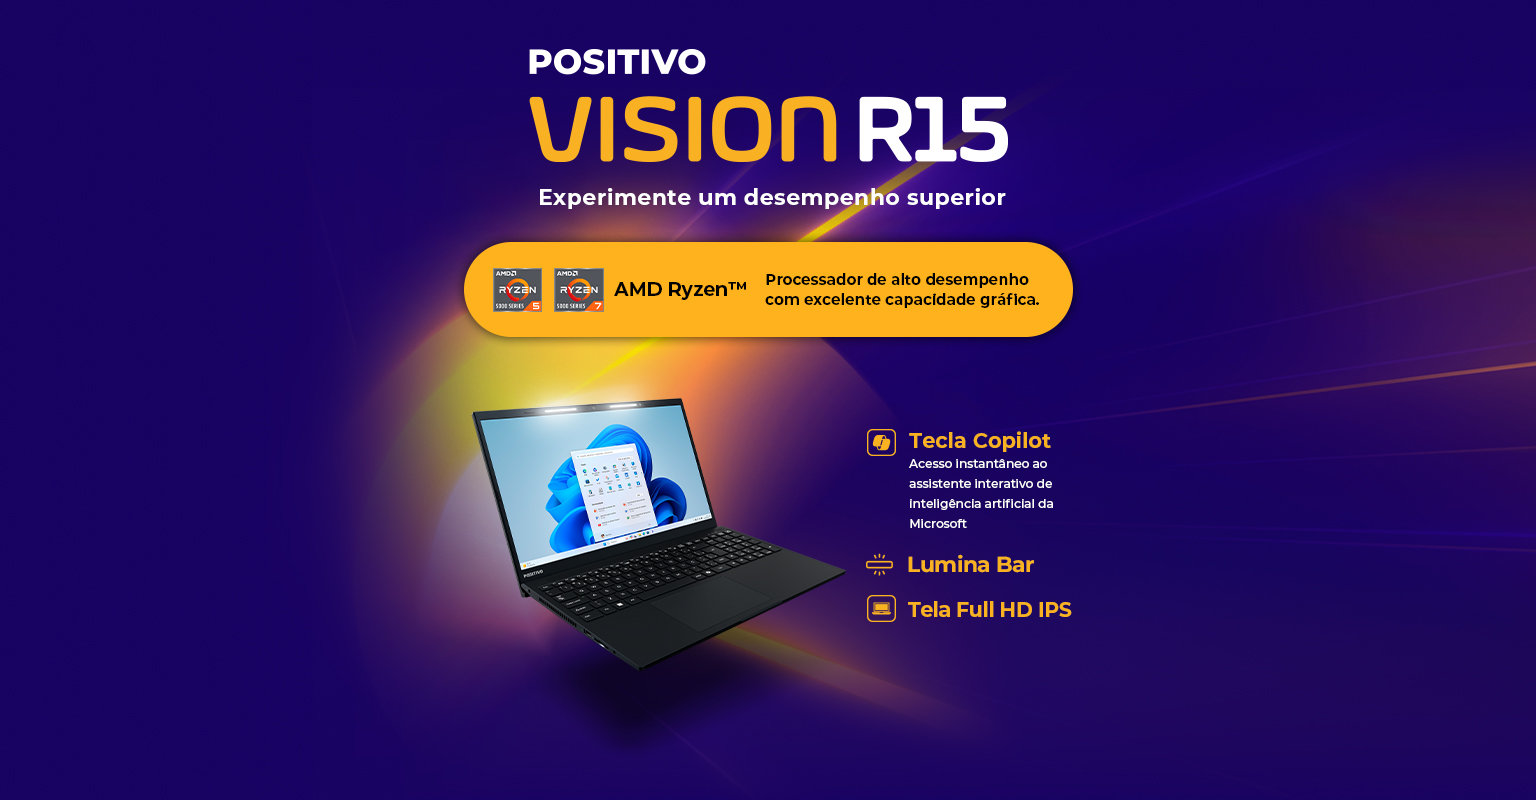 Positivo Vision R15